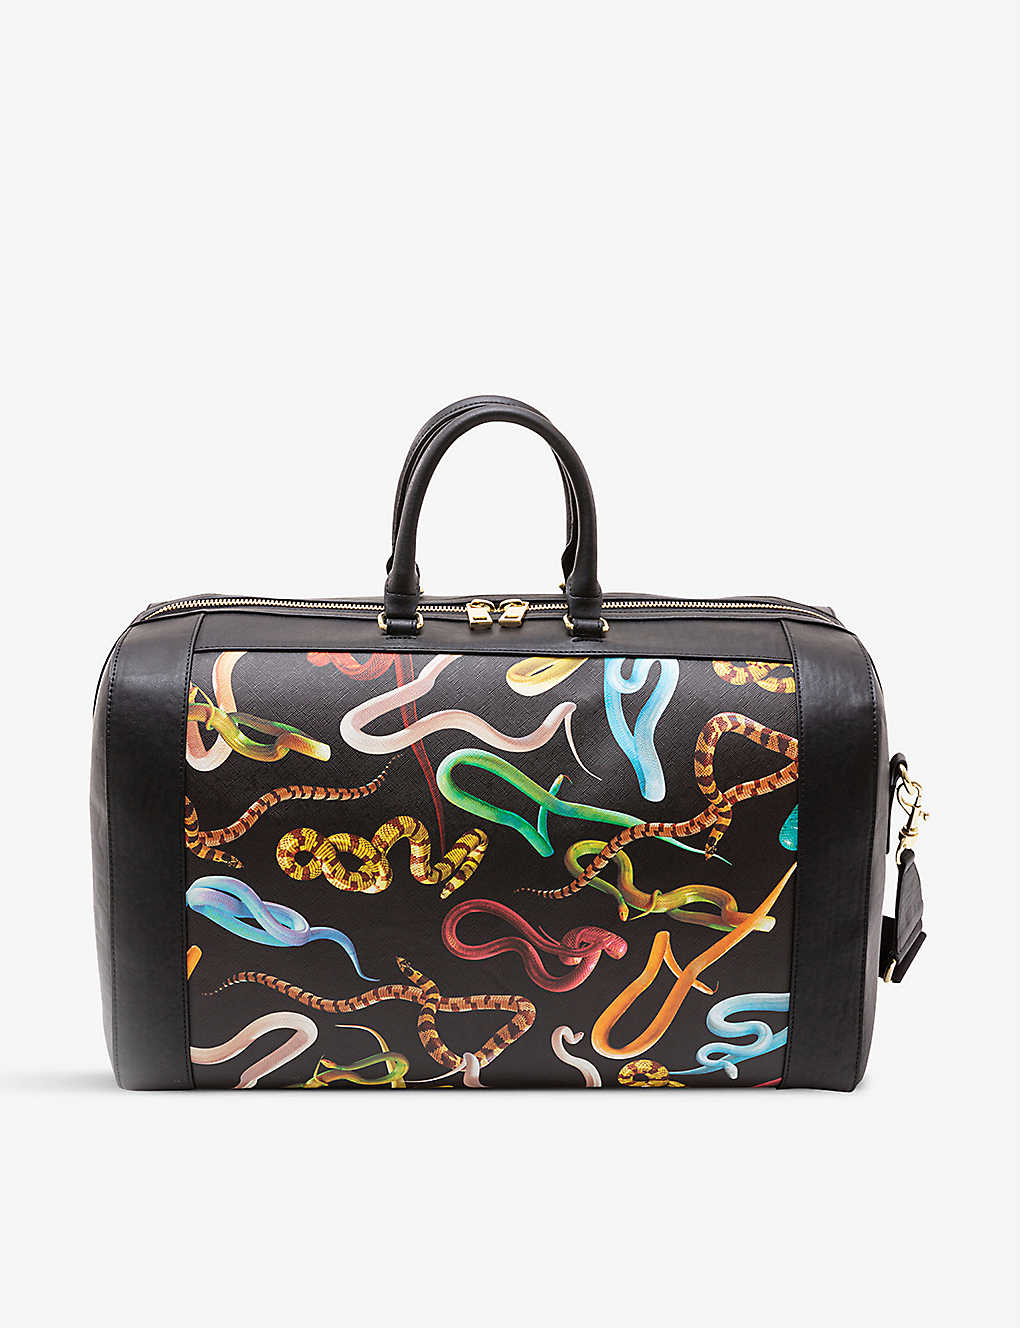 Shop Seletti Wears Toiletpaper Snakes Faux-leather Travel Bag